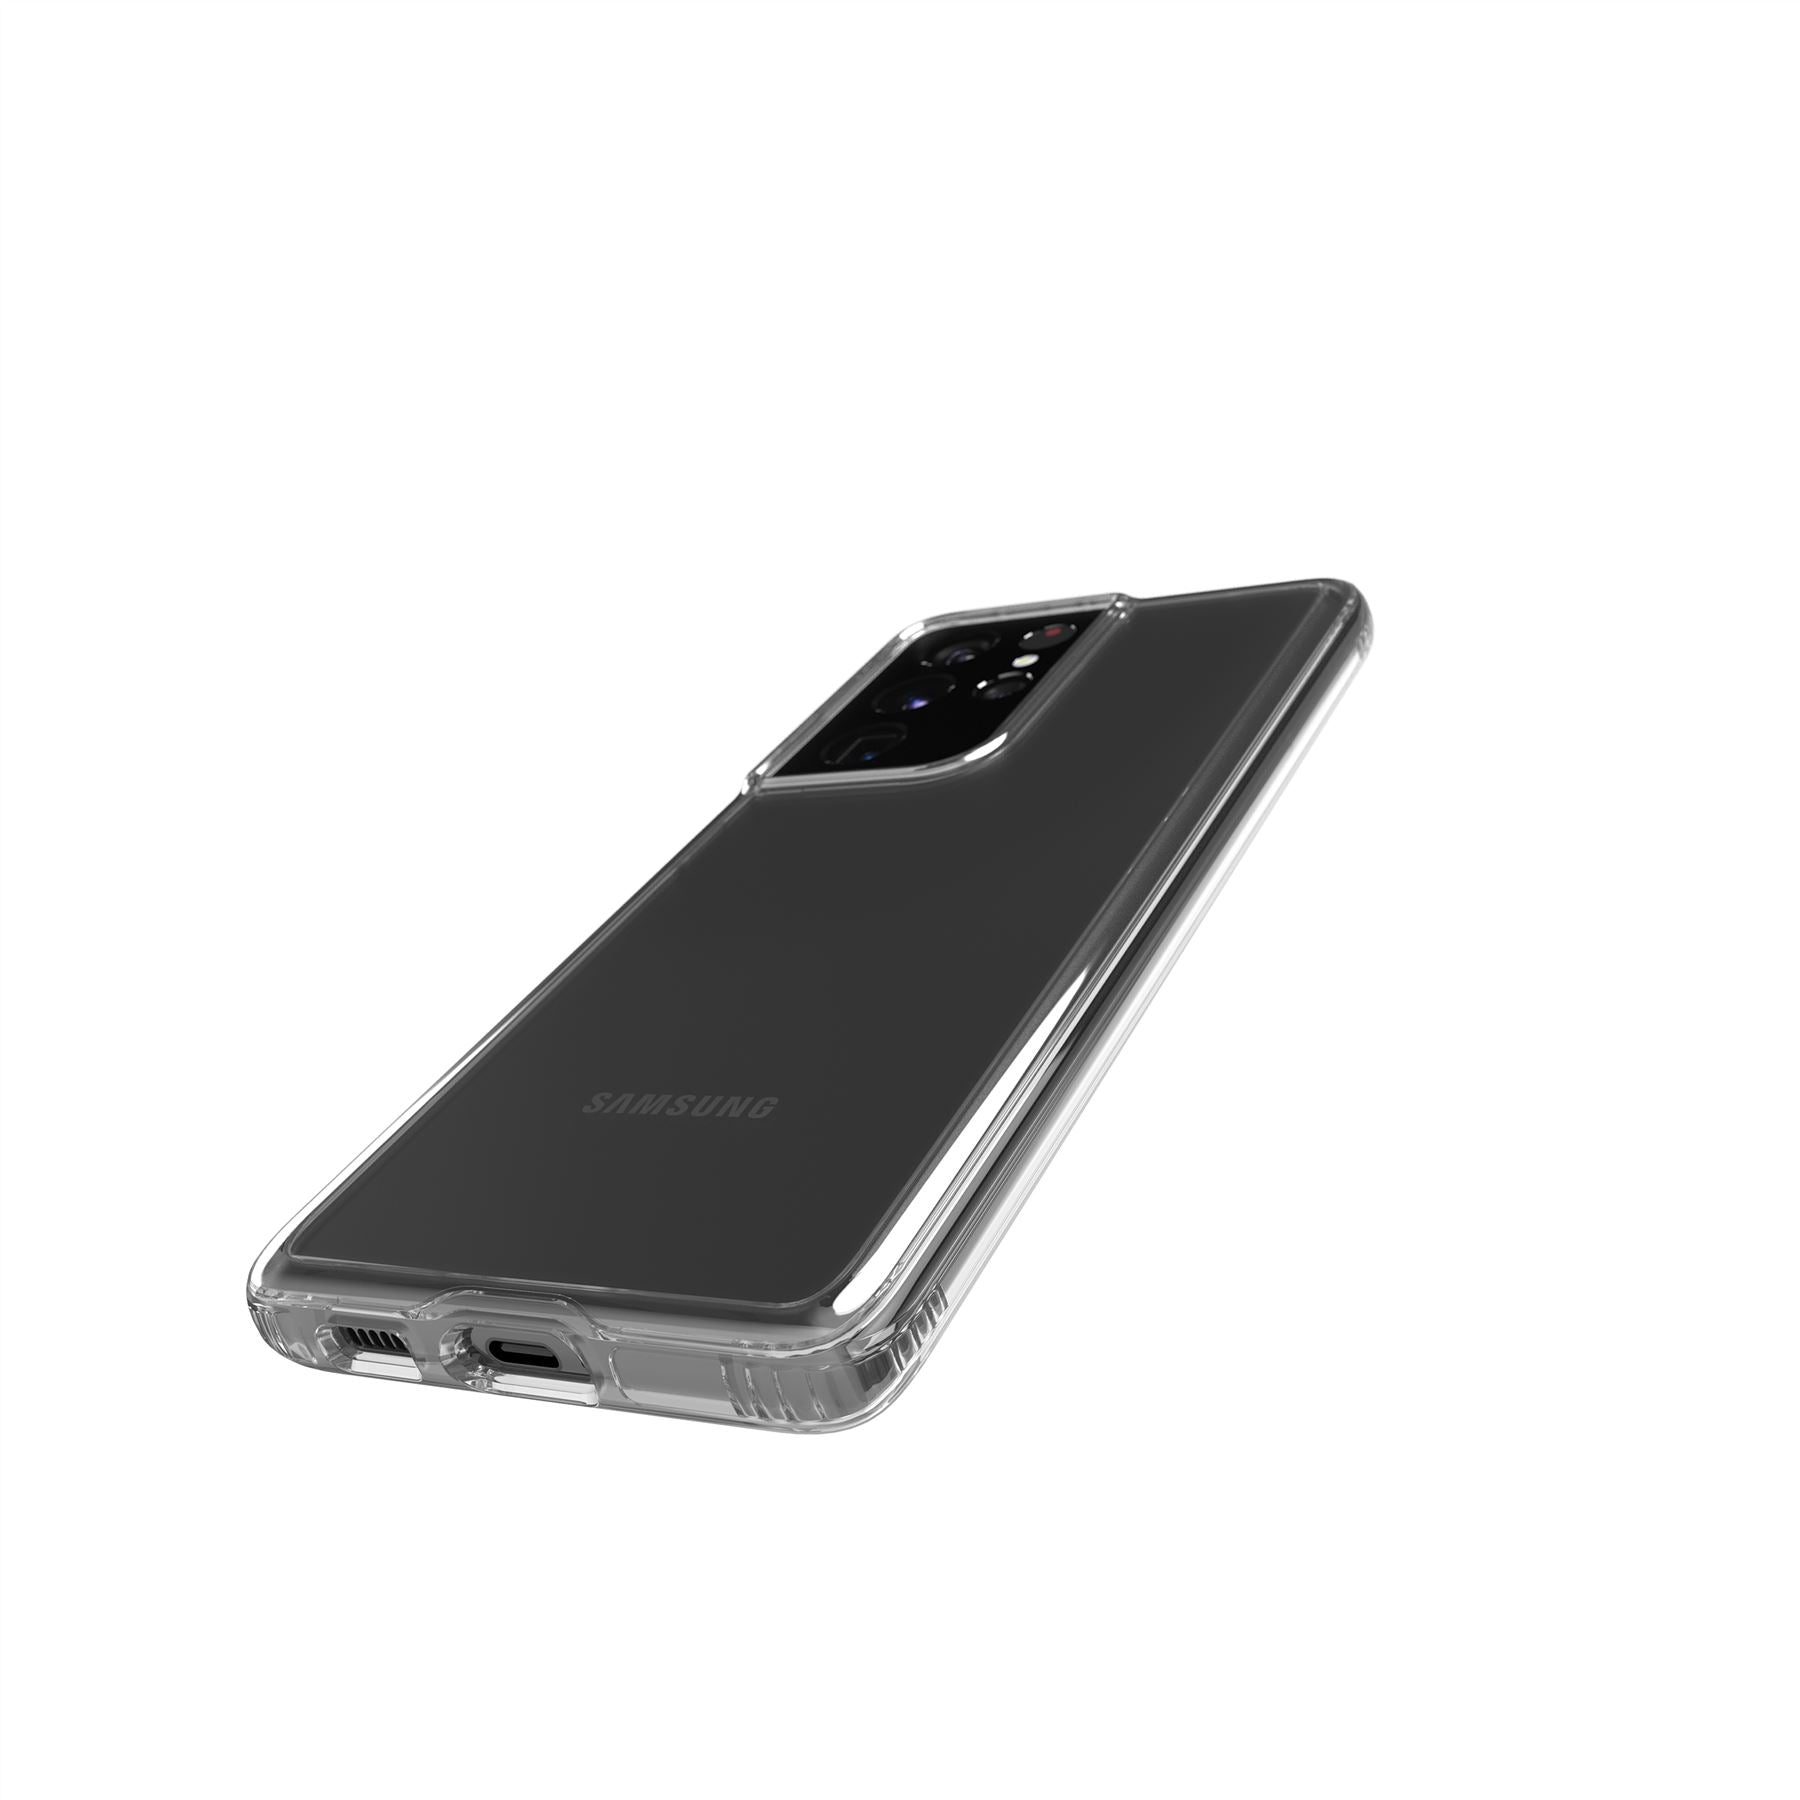 Samsung Galaxy S21 Ultra 5G —